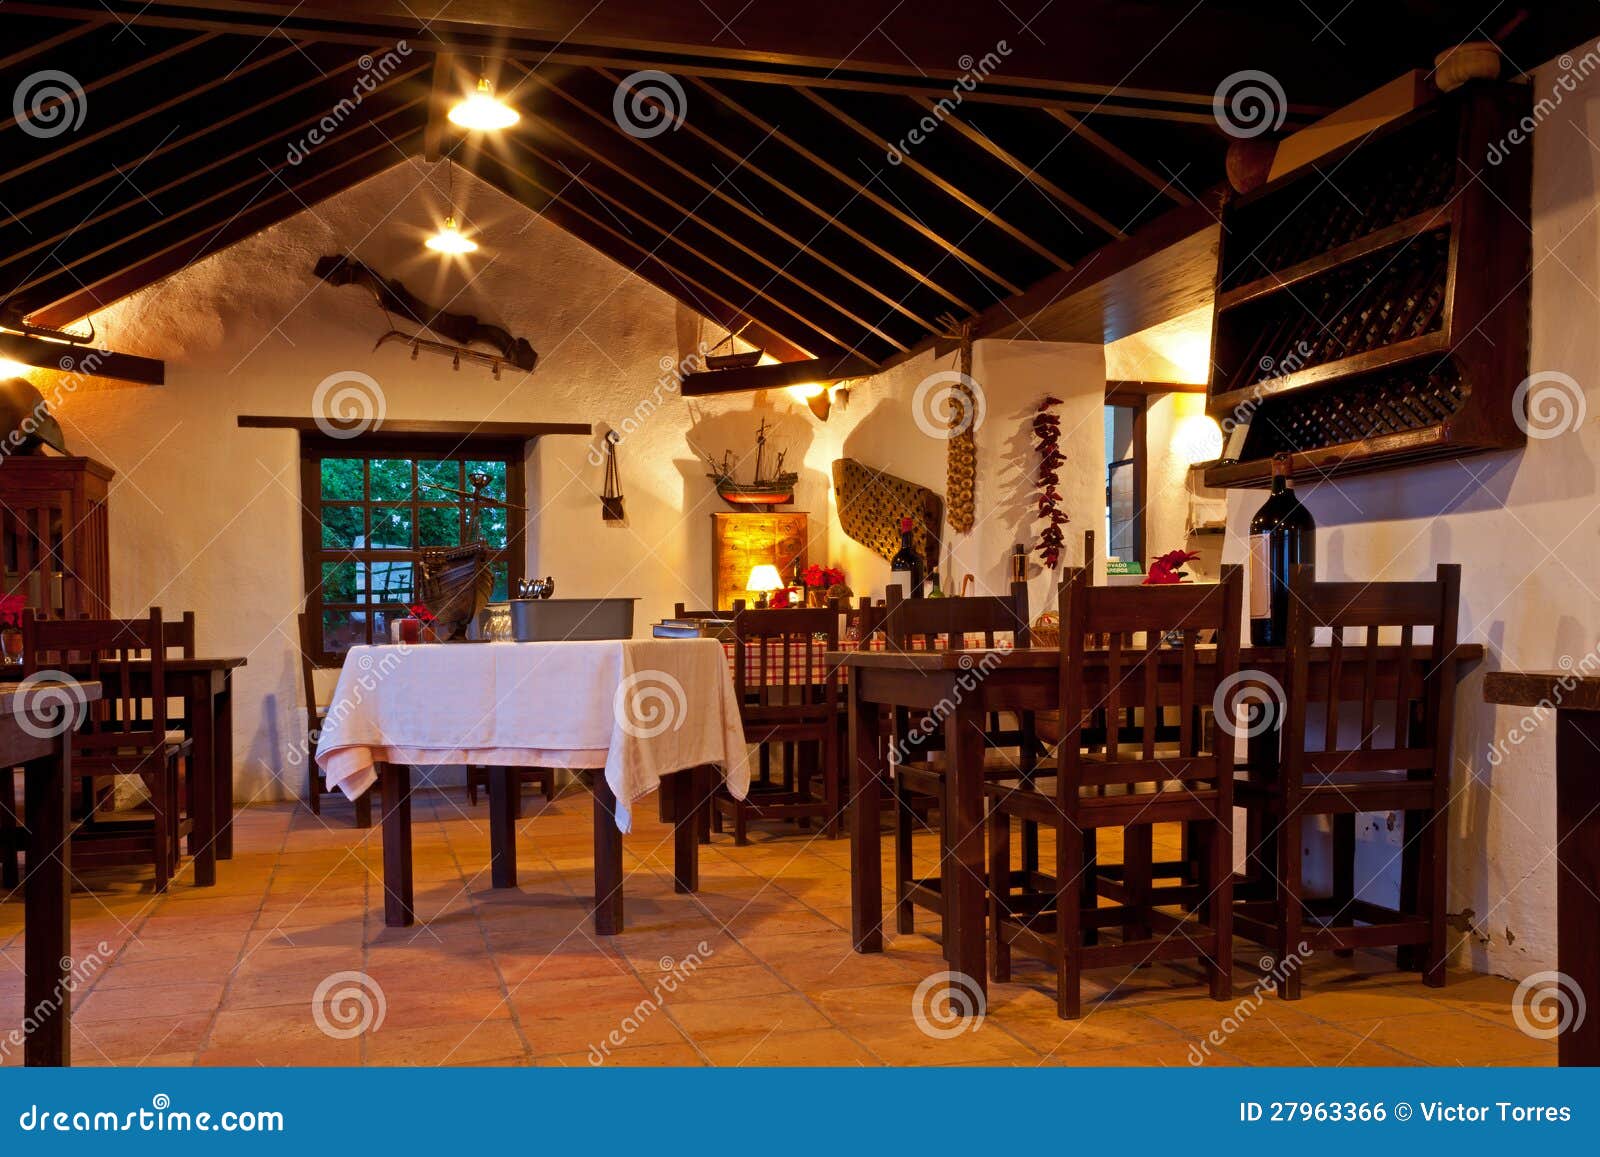 canarian rural restaurant interior